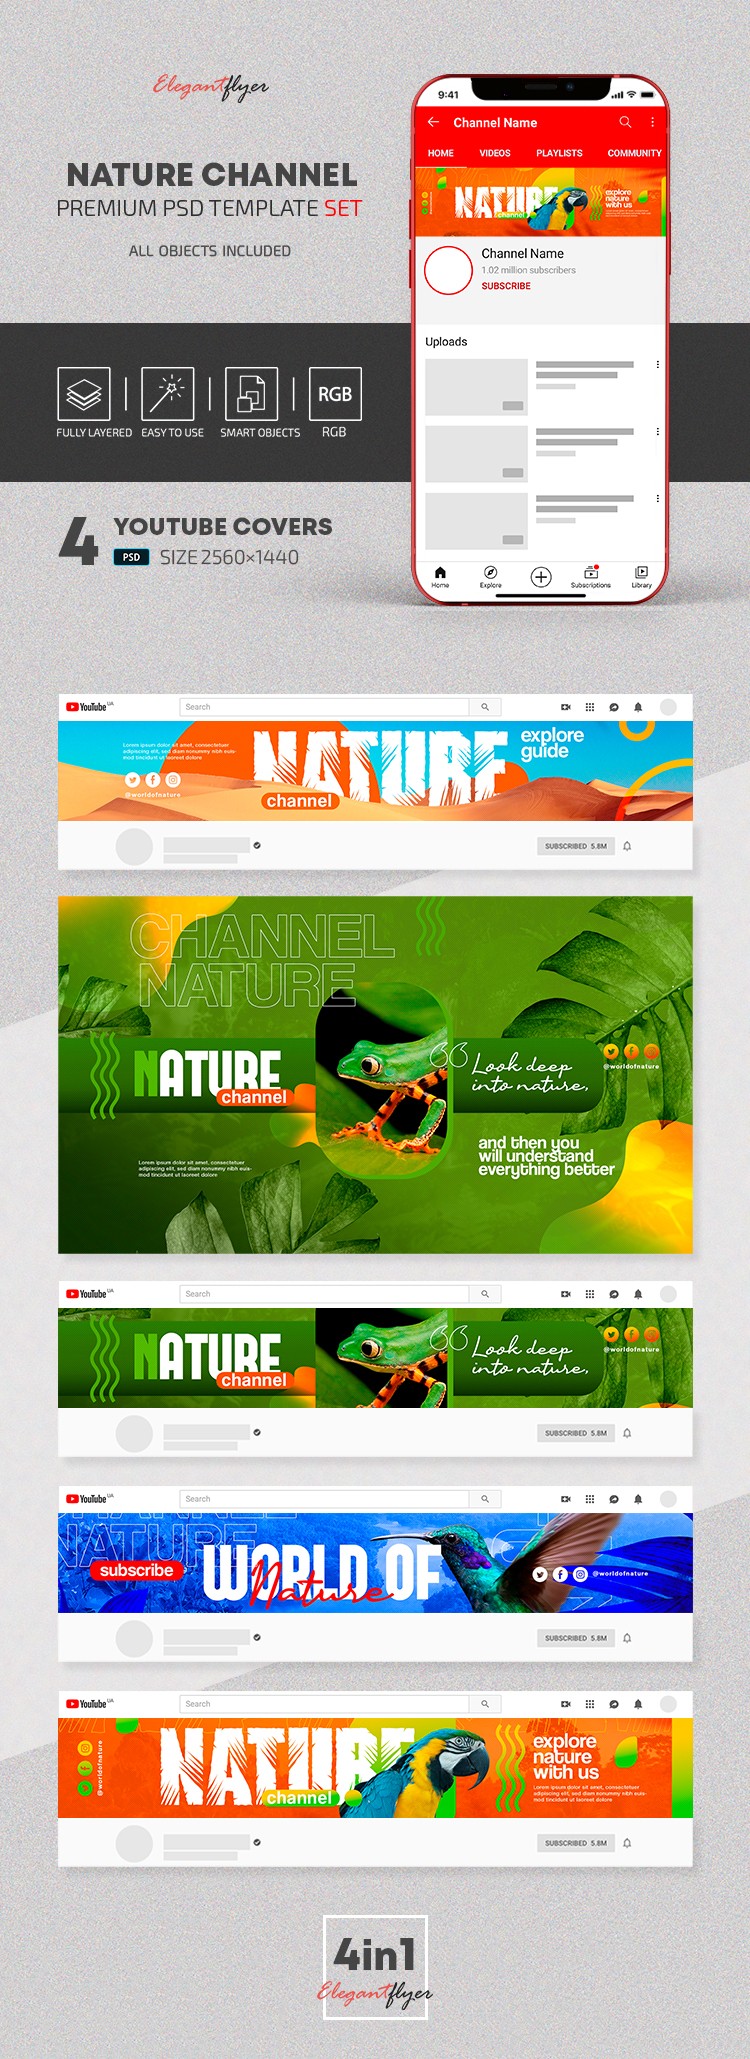 Nature Youtube Channel by ElegantFlyer